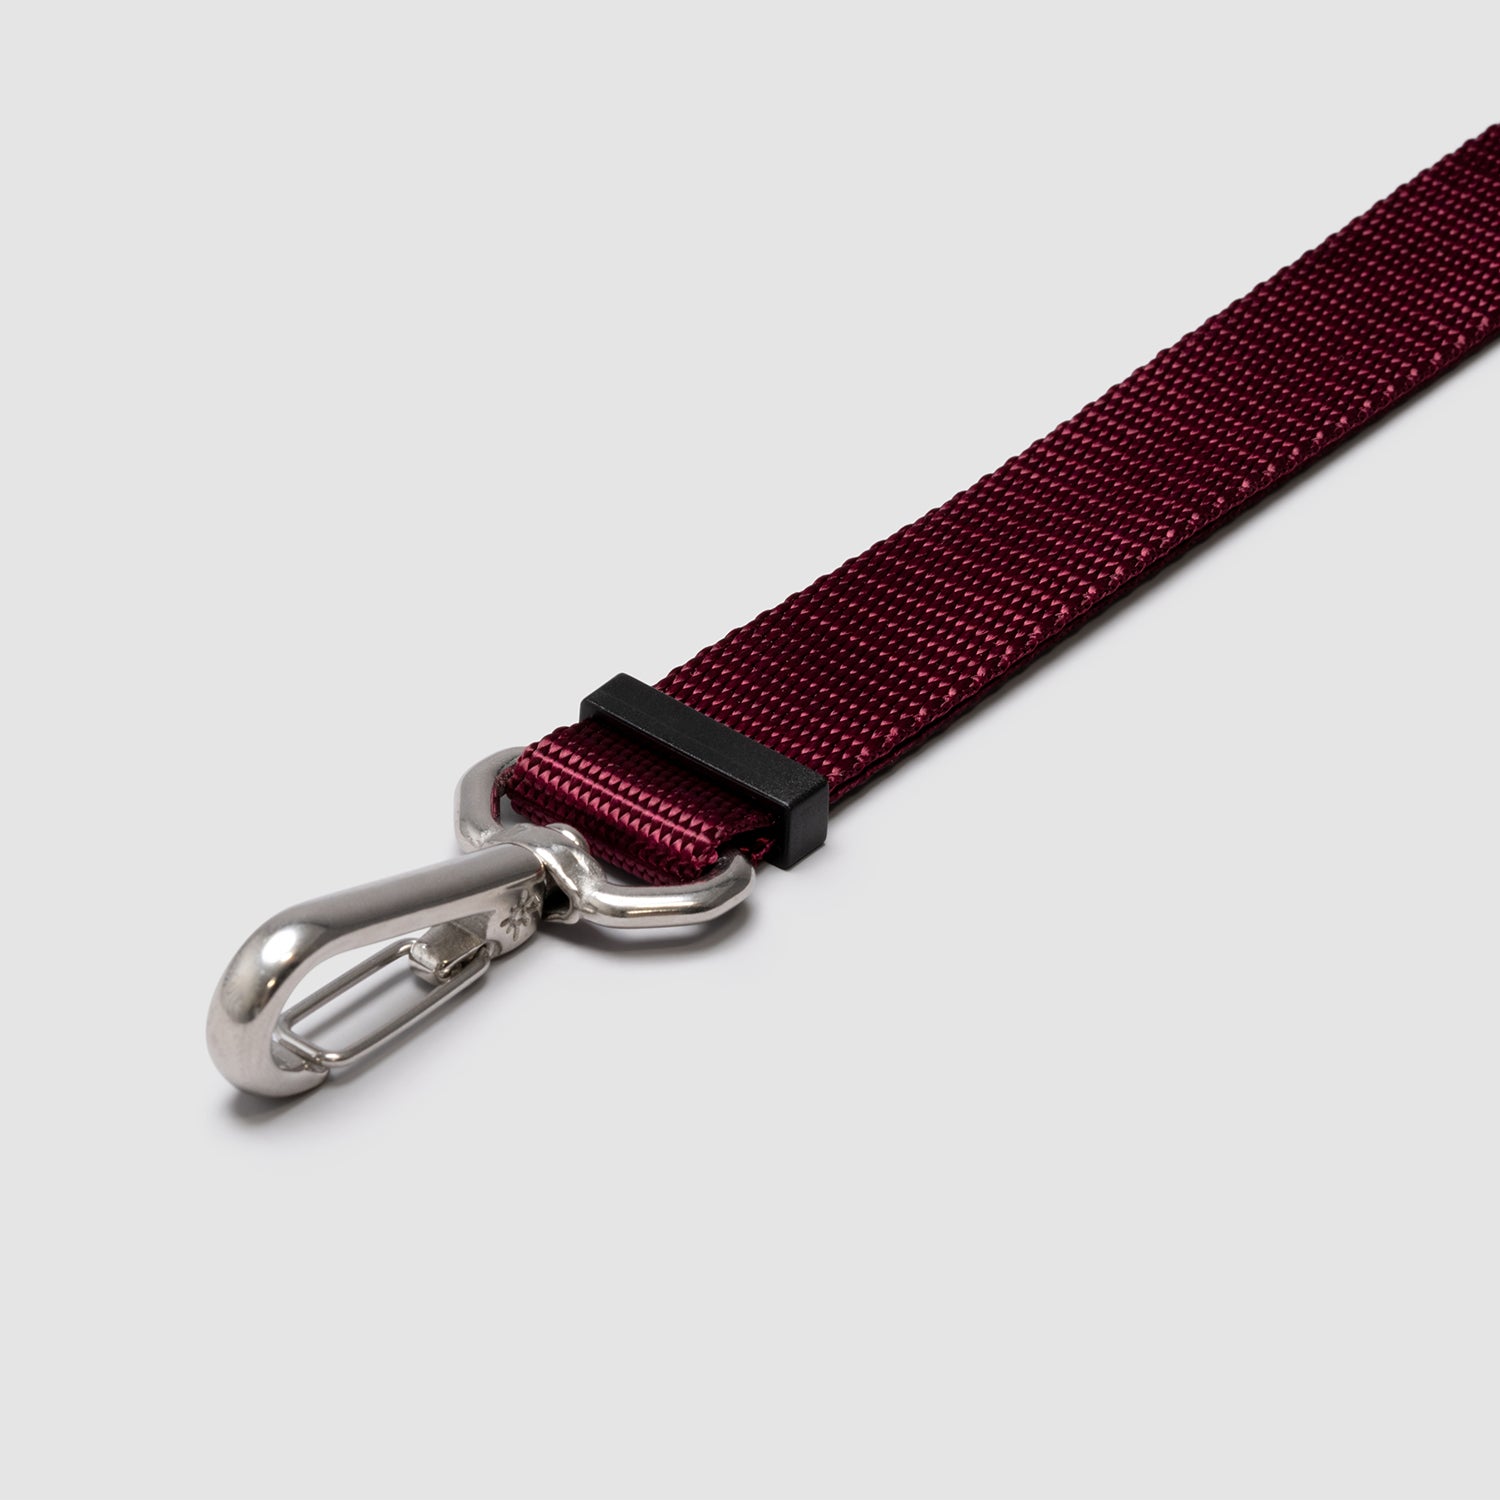 lifetime lite adjustable leash for active dogs handmade in colorado by atlas pet company --maroon